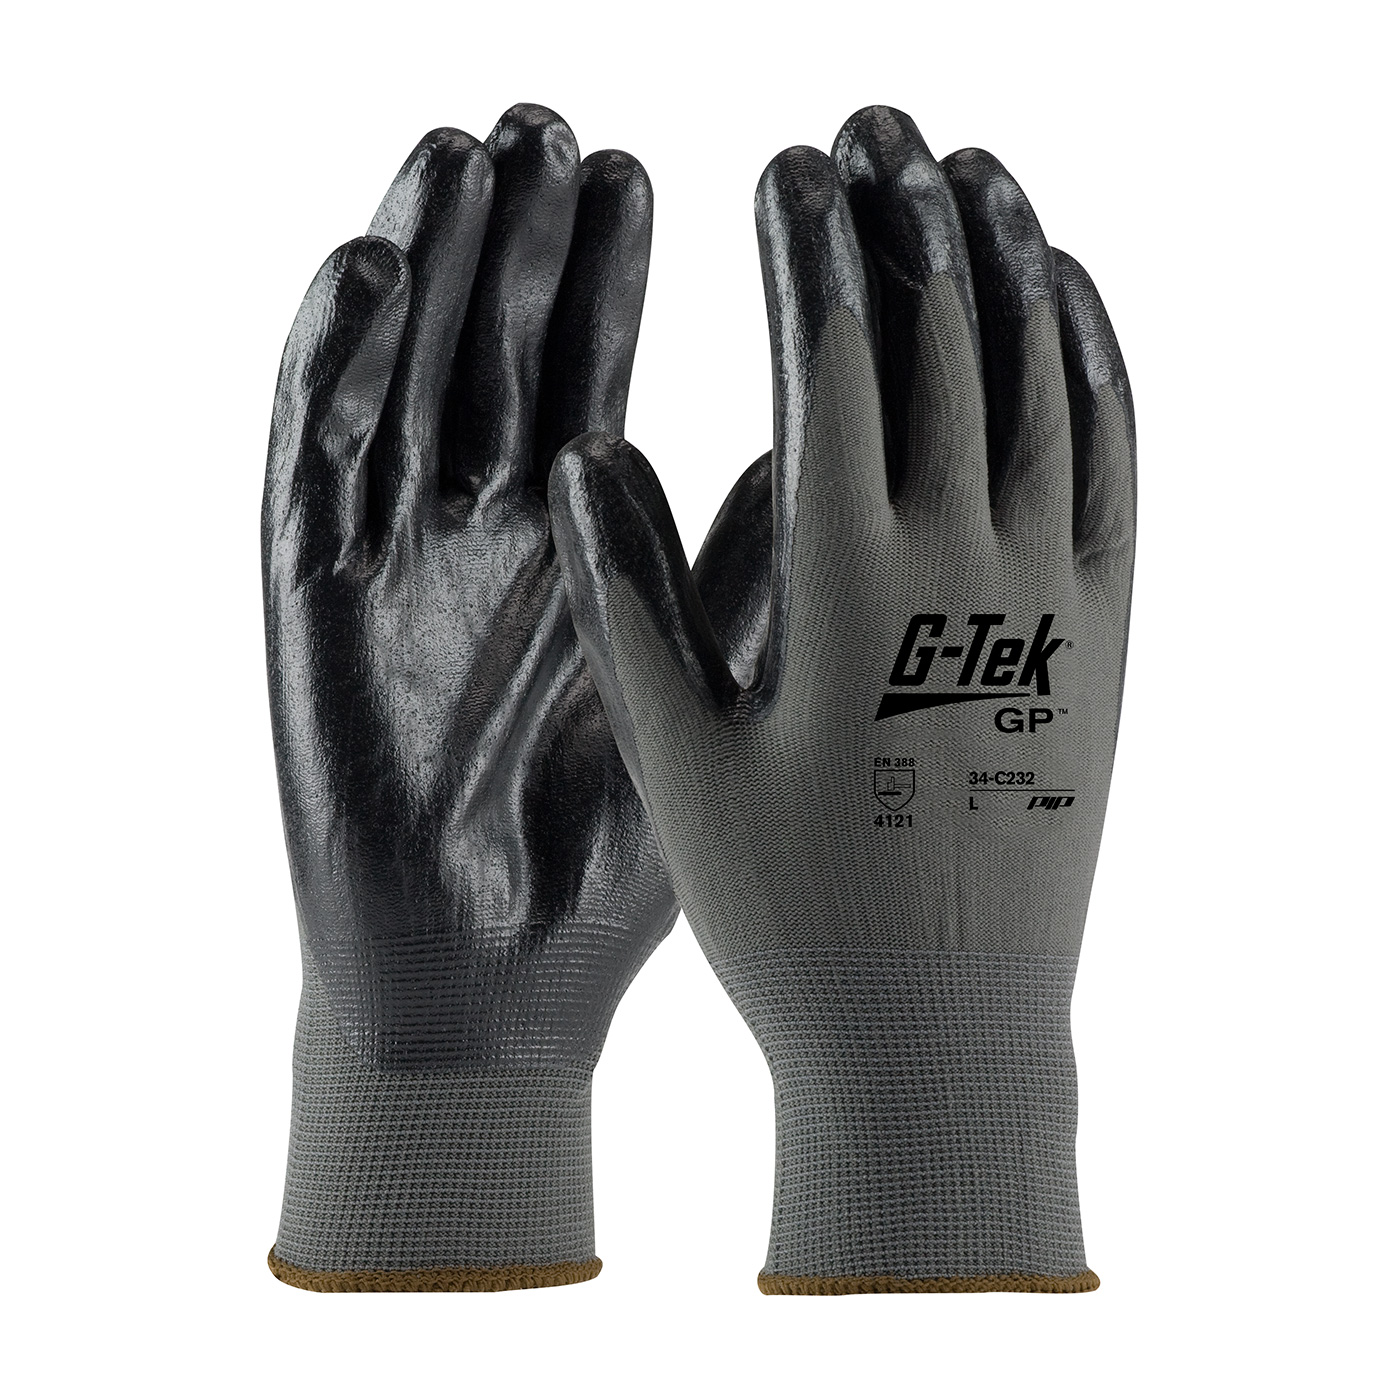 PIP 34-C232/M G-Tek GP Seamless Knit Nylon Glove with Nitrile Coated Foam Grip on Palm & Fingers - Economy Grade - Medium PID-34 C232 M